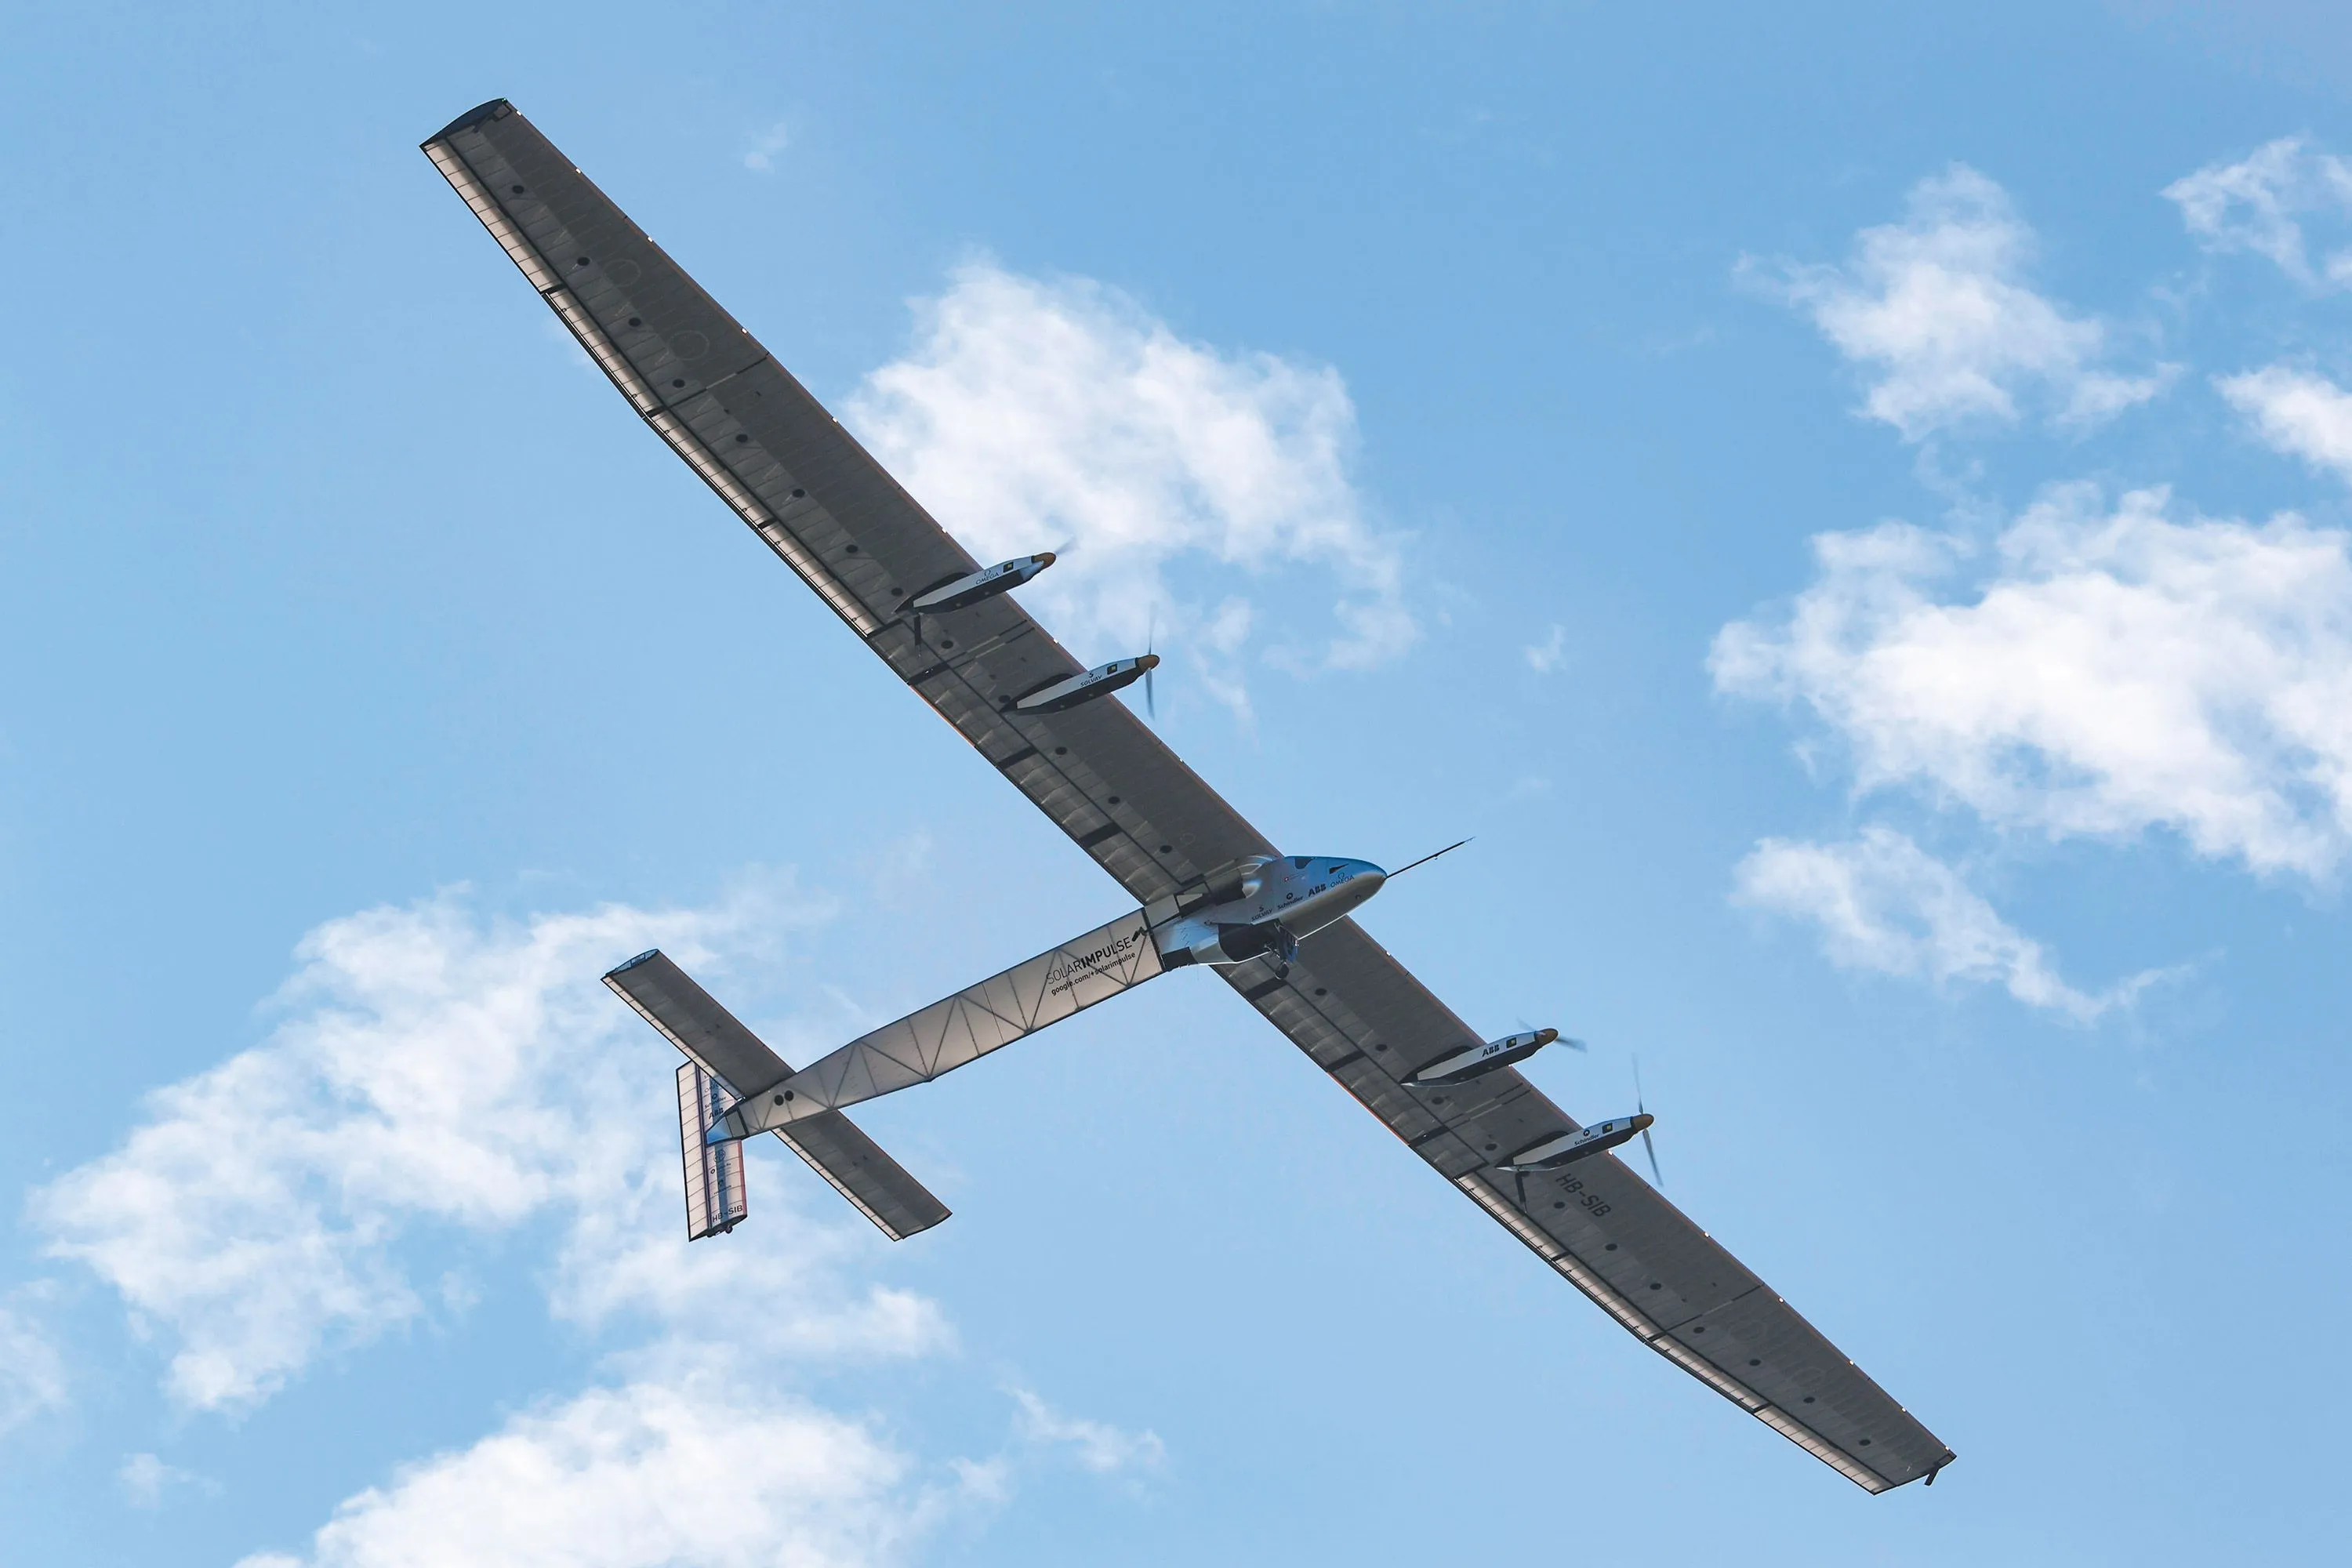 Solar Impulse 2.